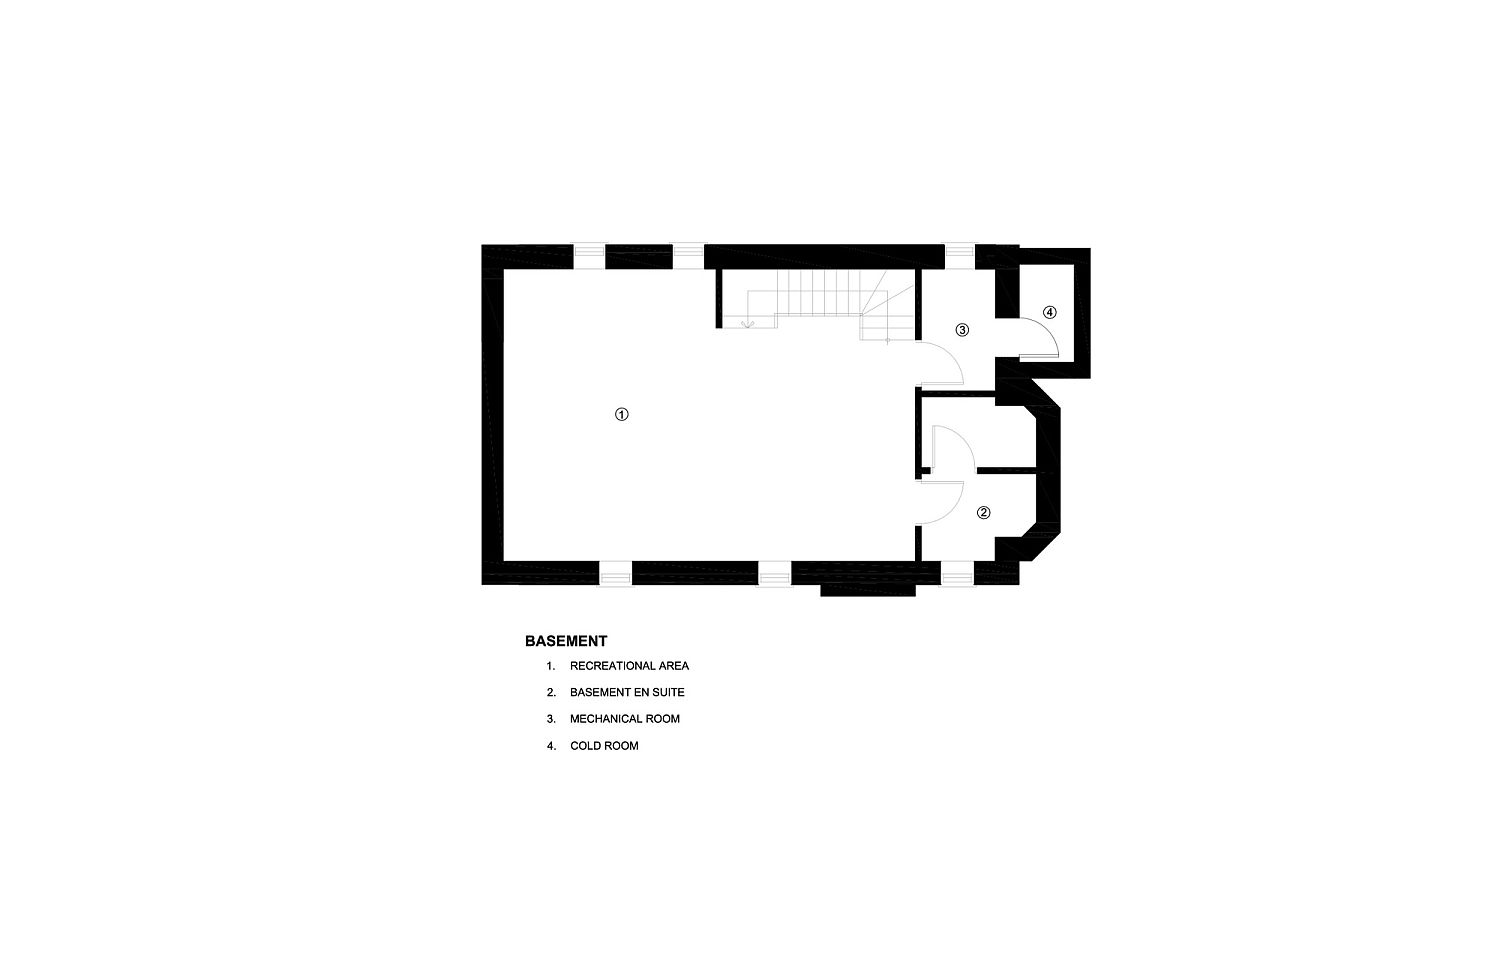 Basement floor plan of the Art House